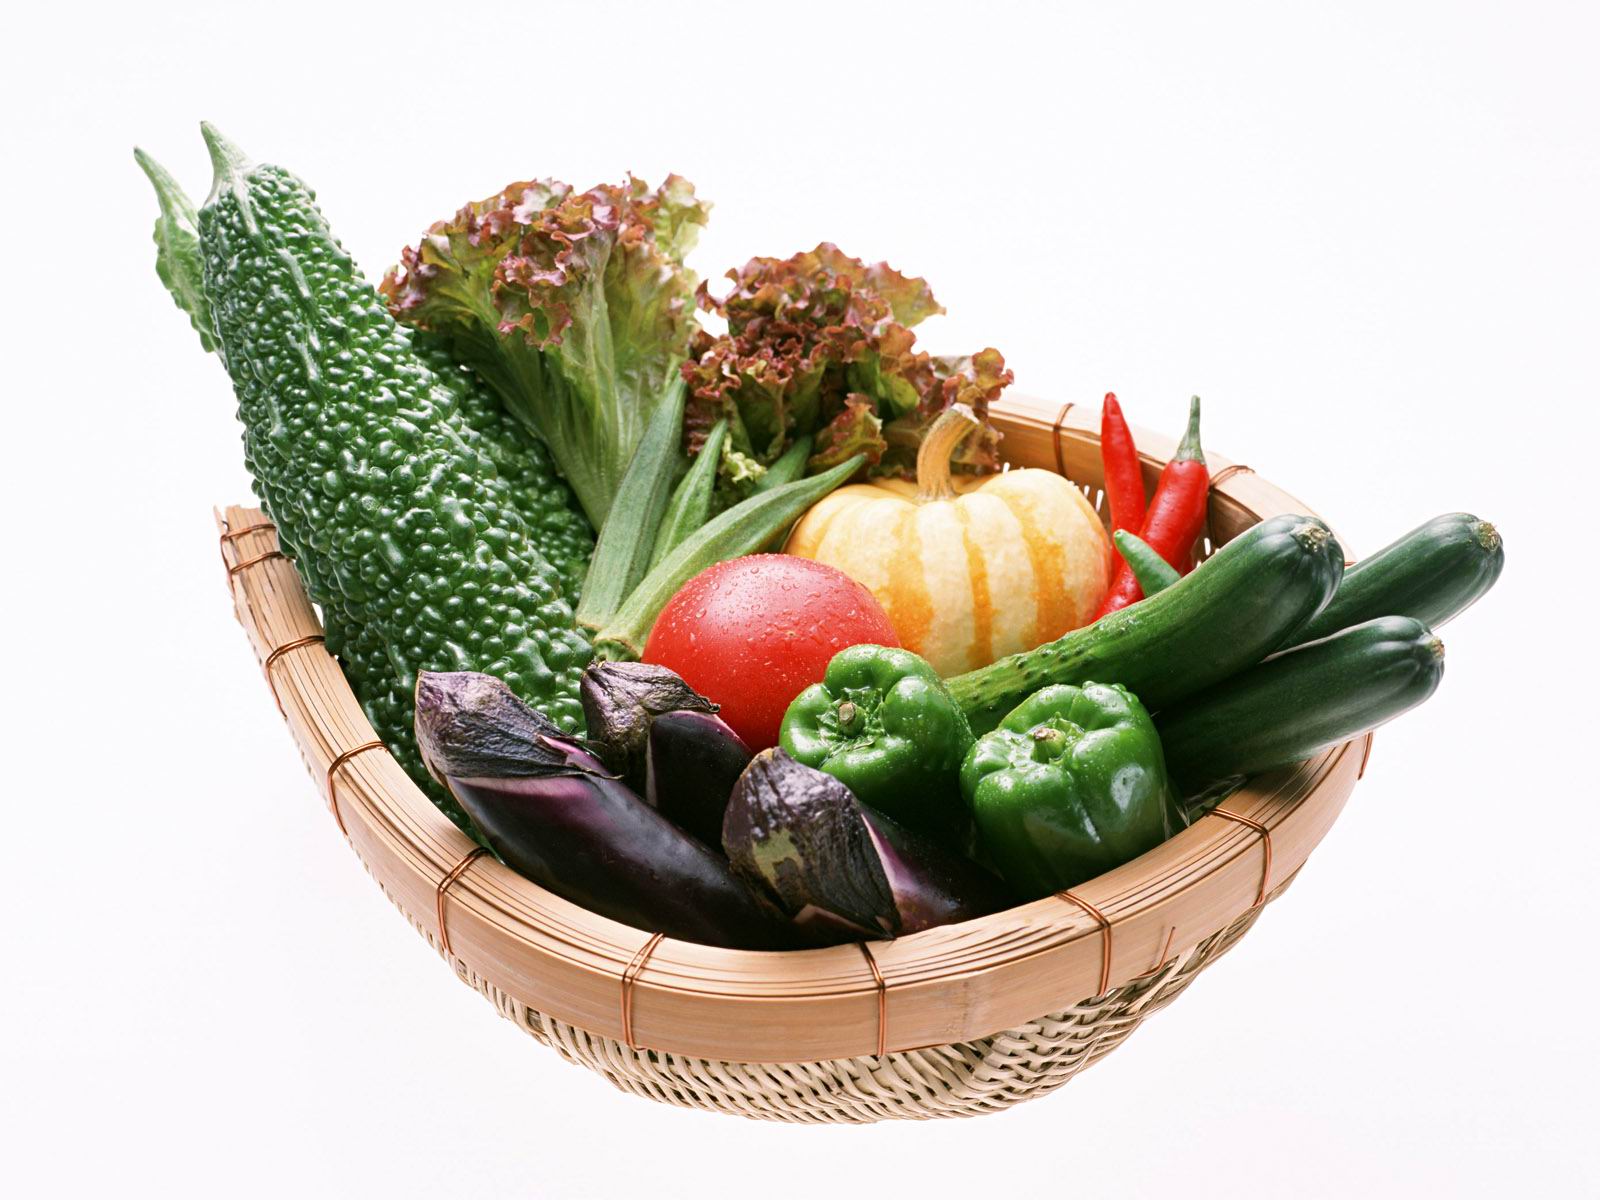 http://4.bp.blogspot.com/_k-qaIzeSdc4/S9H2y-UhiUI/AAAAAAAAOSE/i2xPqalVA_M/s1600/Green+Beautiful+Vegetables+Desktop+HD+Wallpapers_9.jpg